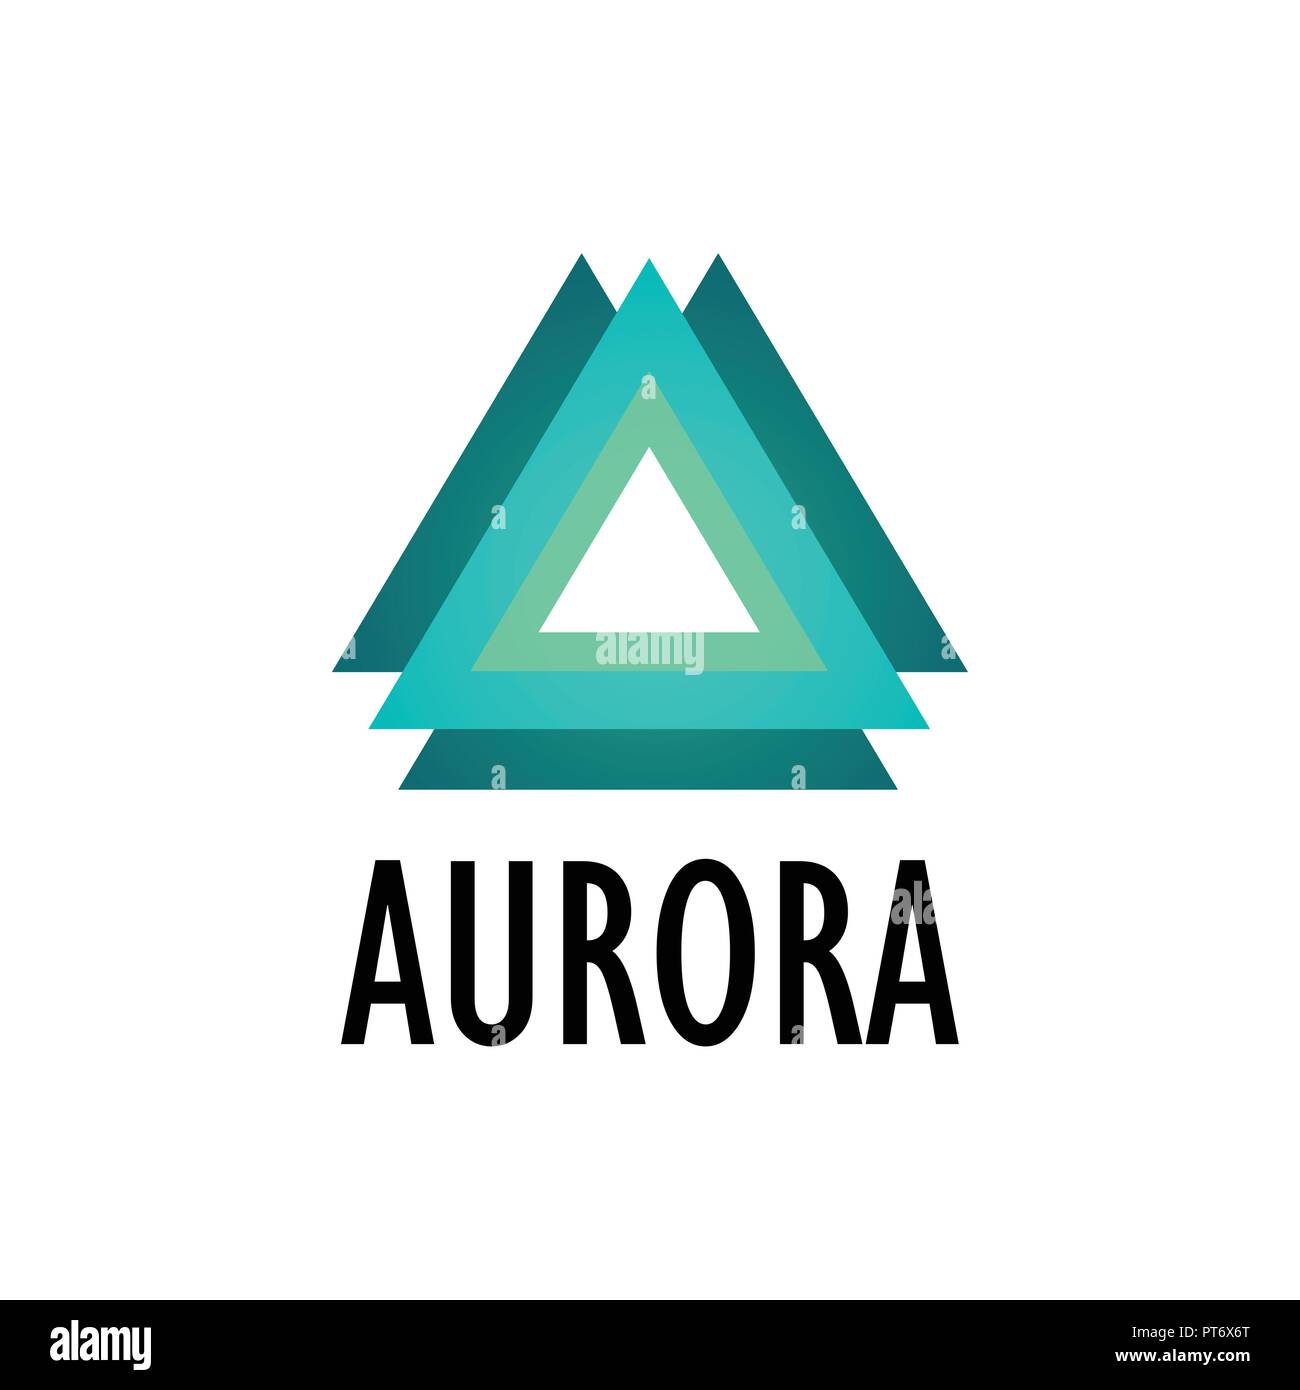 Logotype de Aurora, Northern Lights Illustration de Vecteur